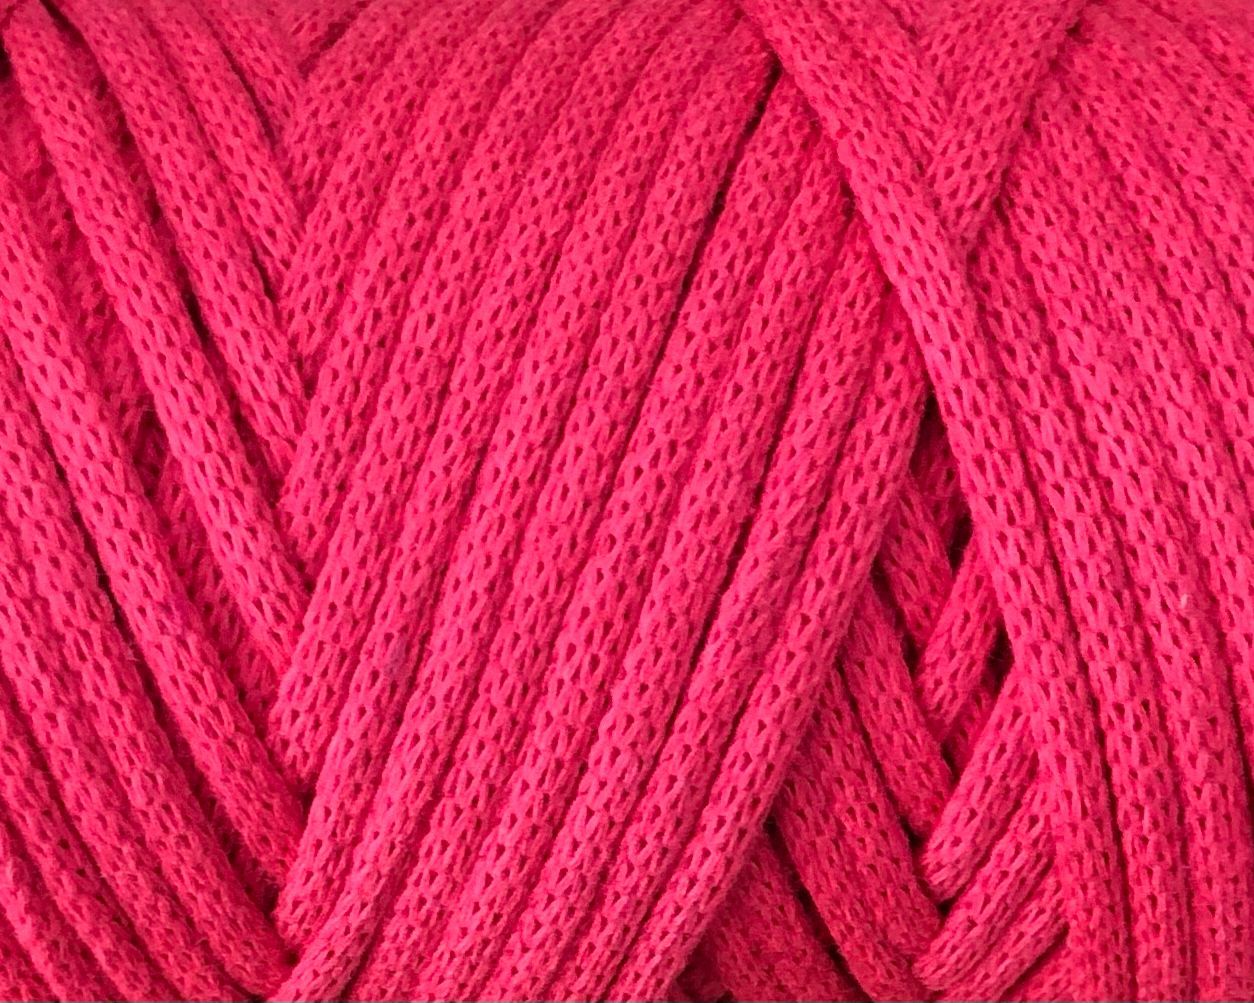 Yarnart Macrame Cord 3 mm - Macrame Cord Neon Pink - 803